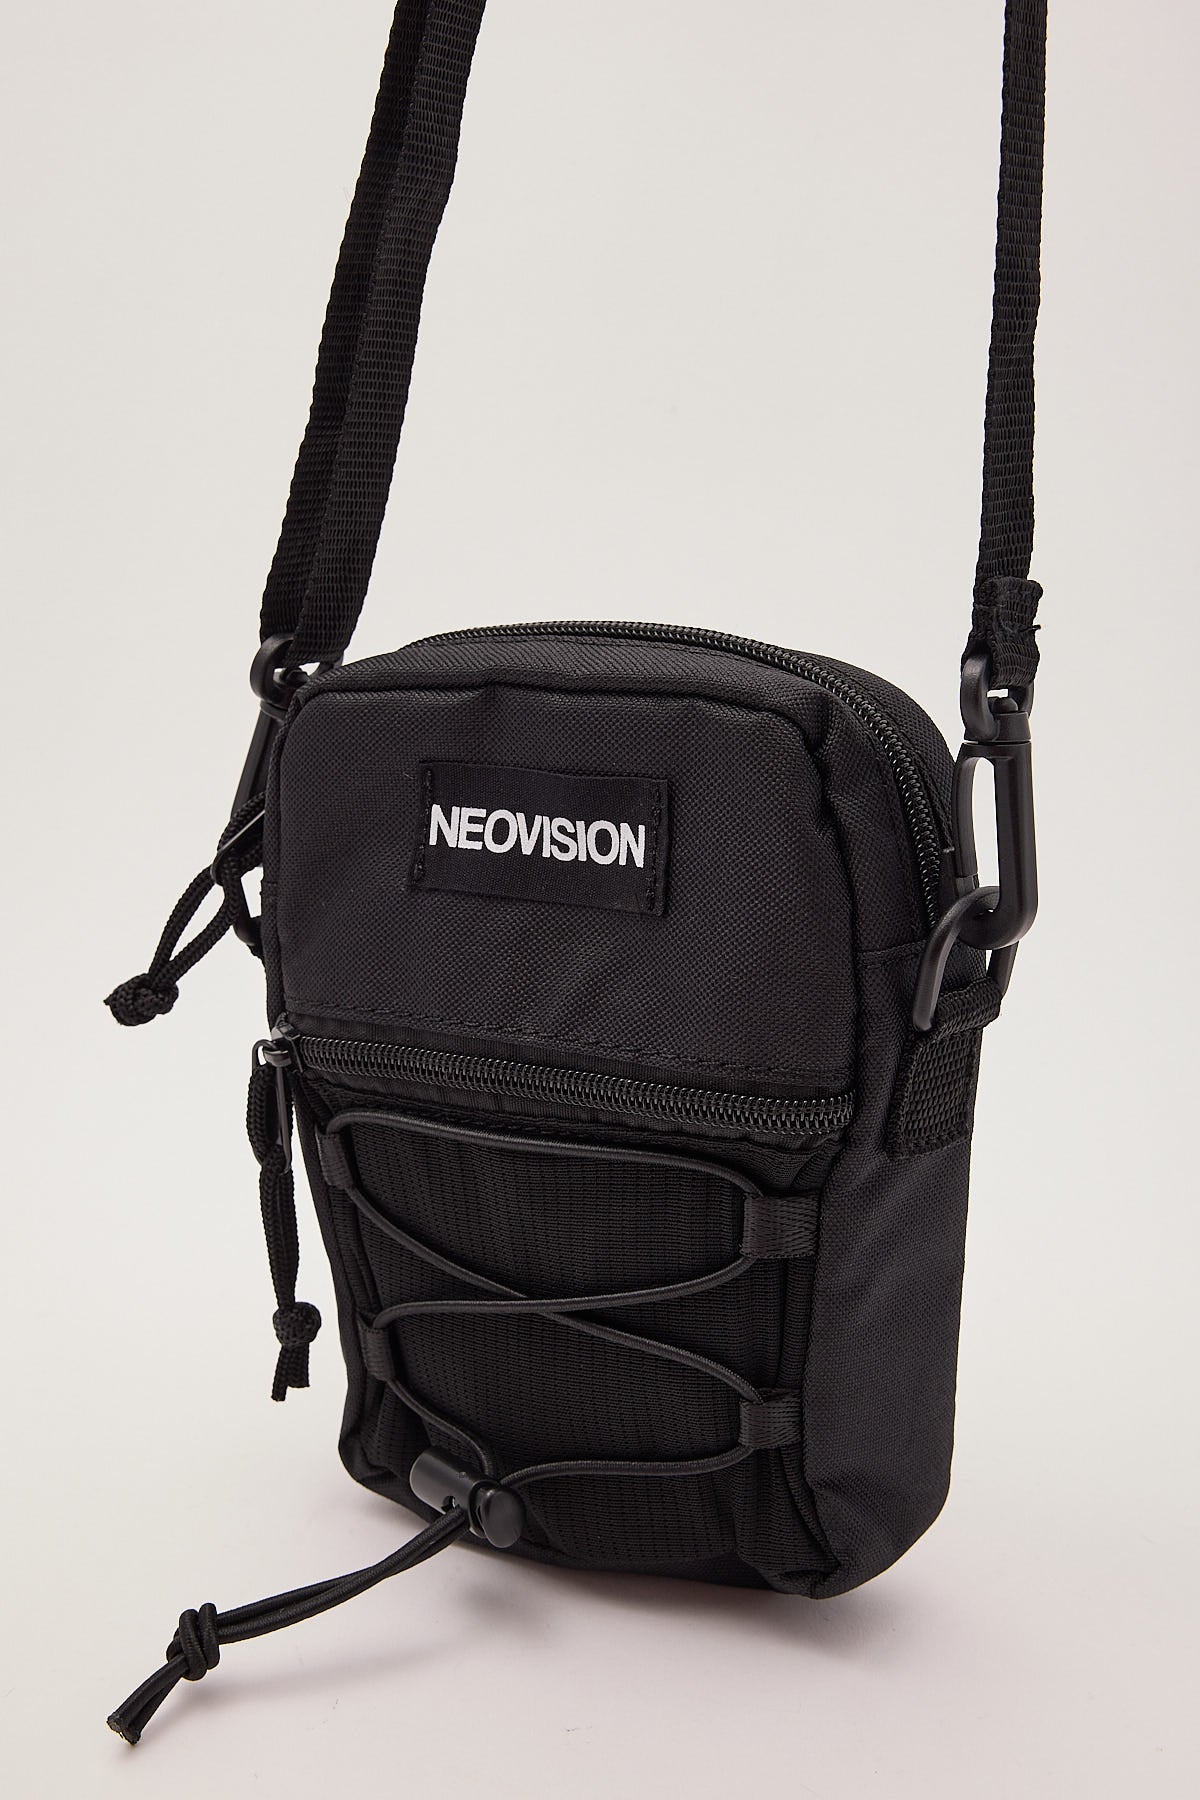 Neovision Strappy Crossover Bag Black